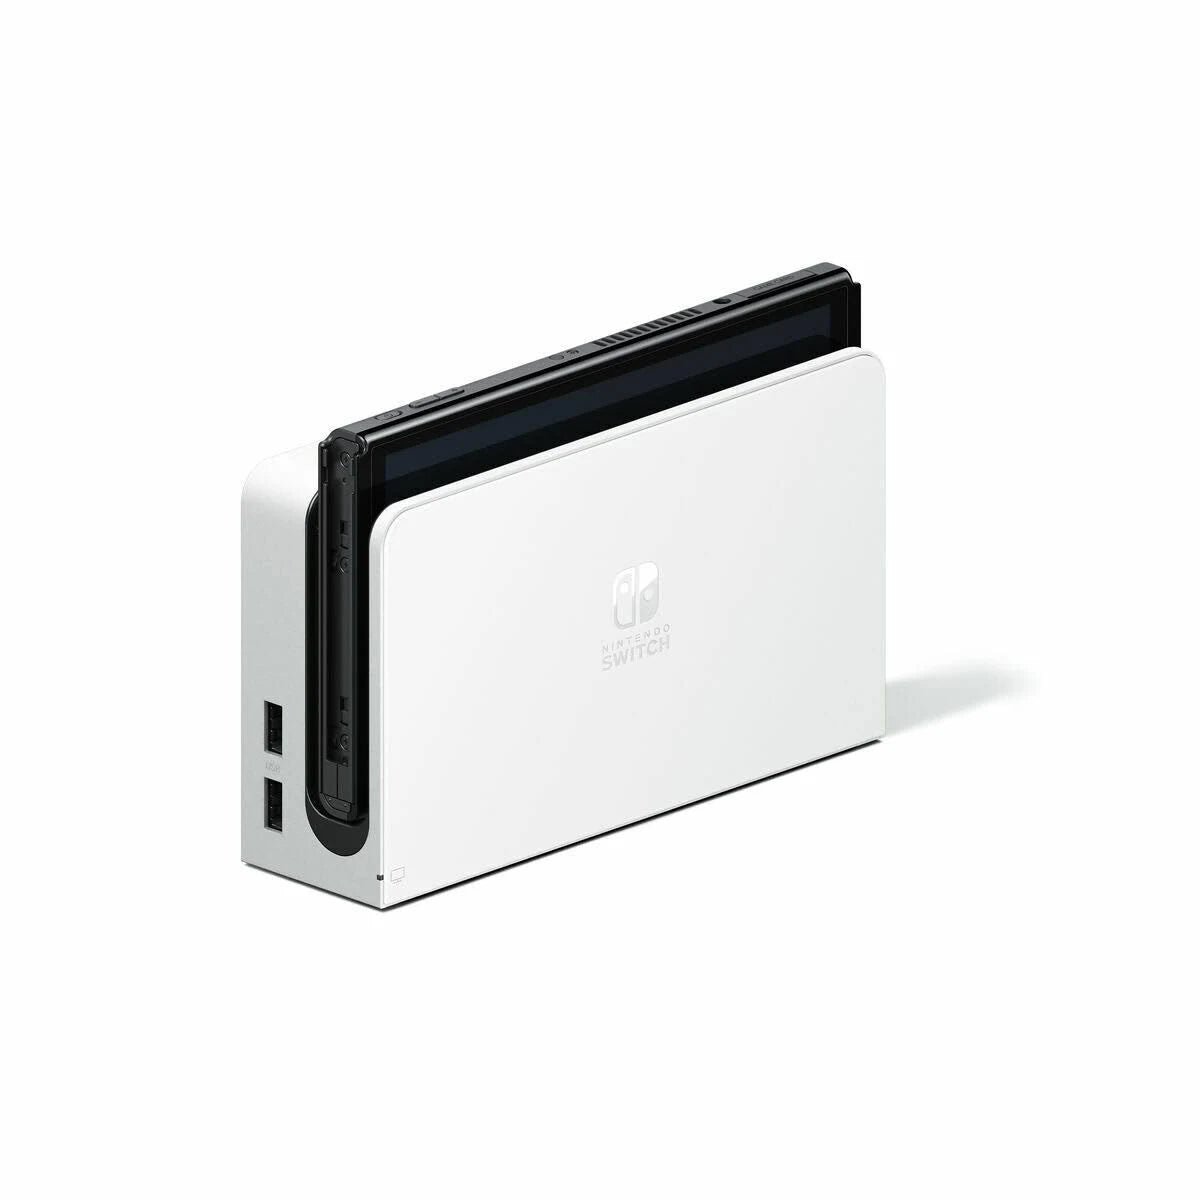 Nintendo Switch OLED model - white - Renowoutlet.com